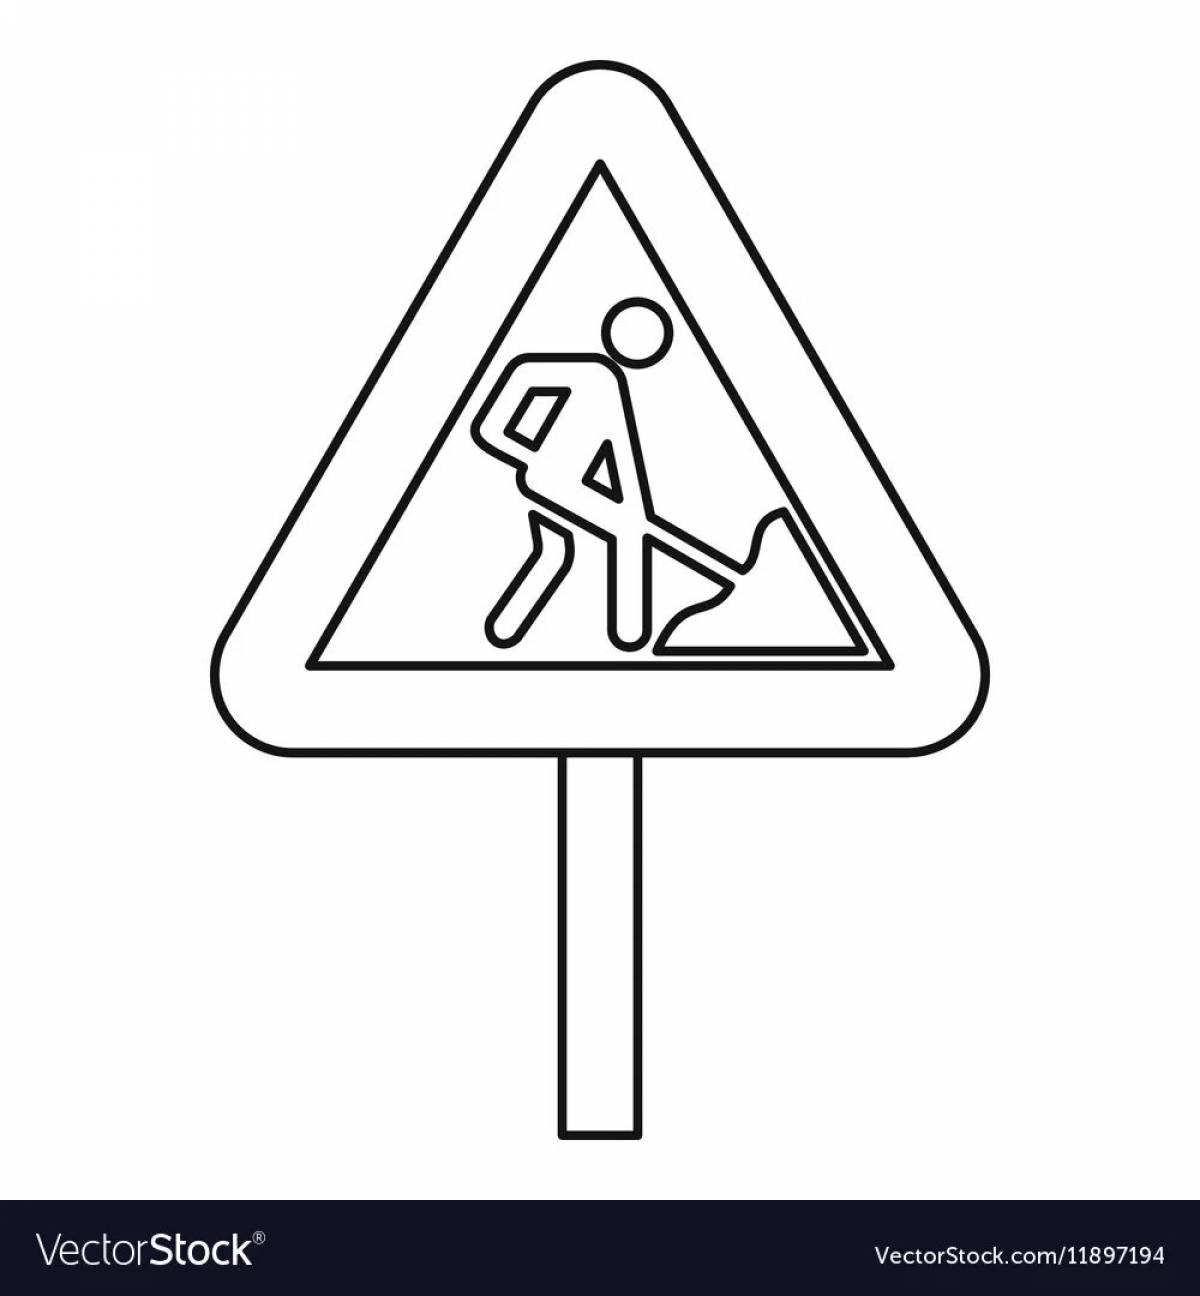 Fun warning signs for babies